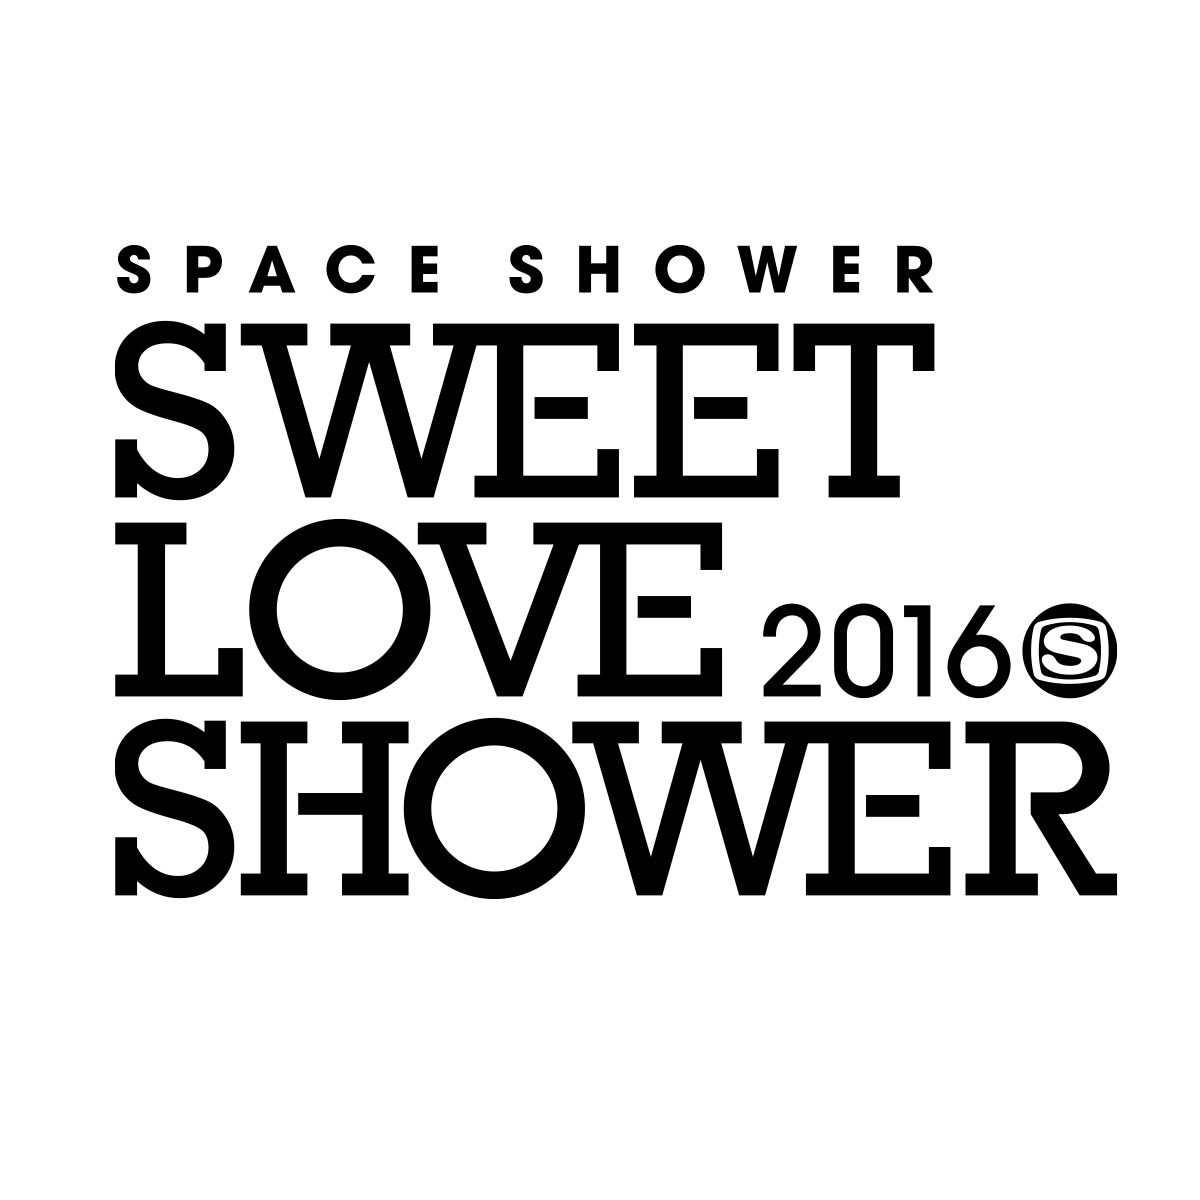 SWEET LOVE SHOWER 2016